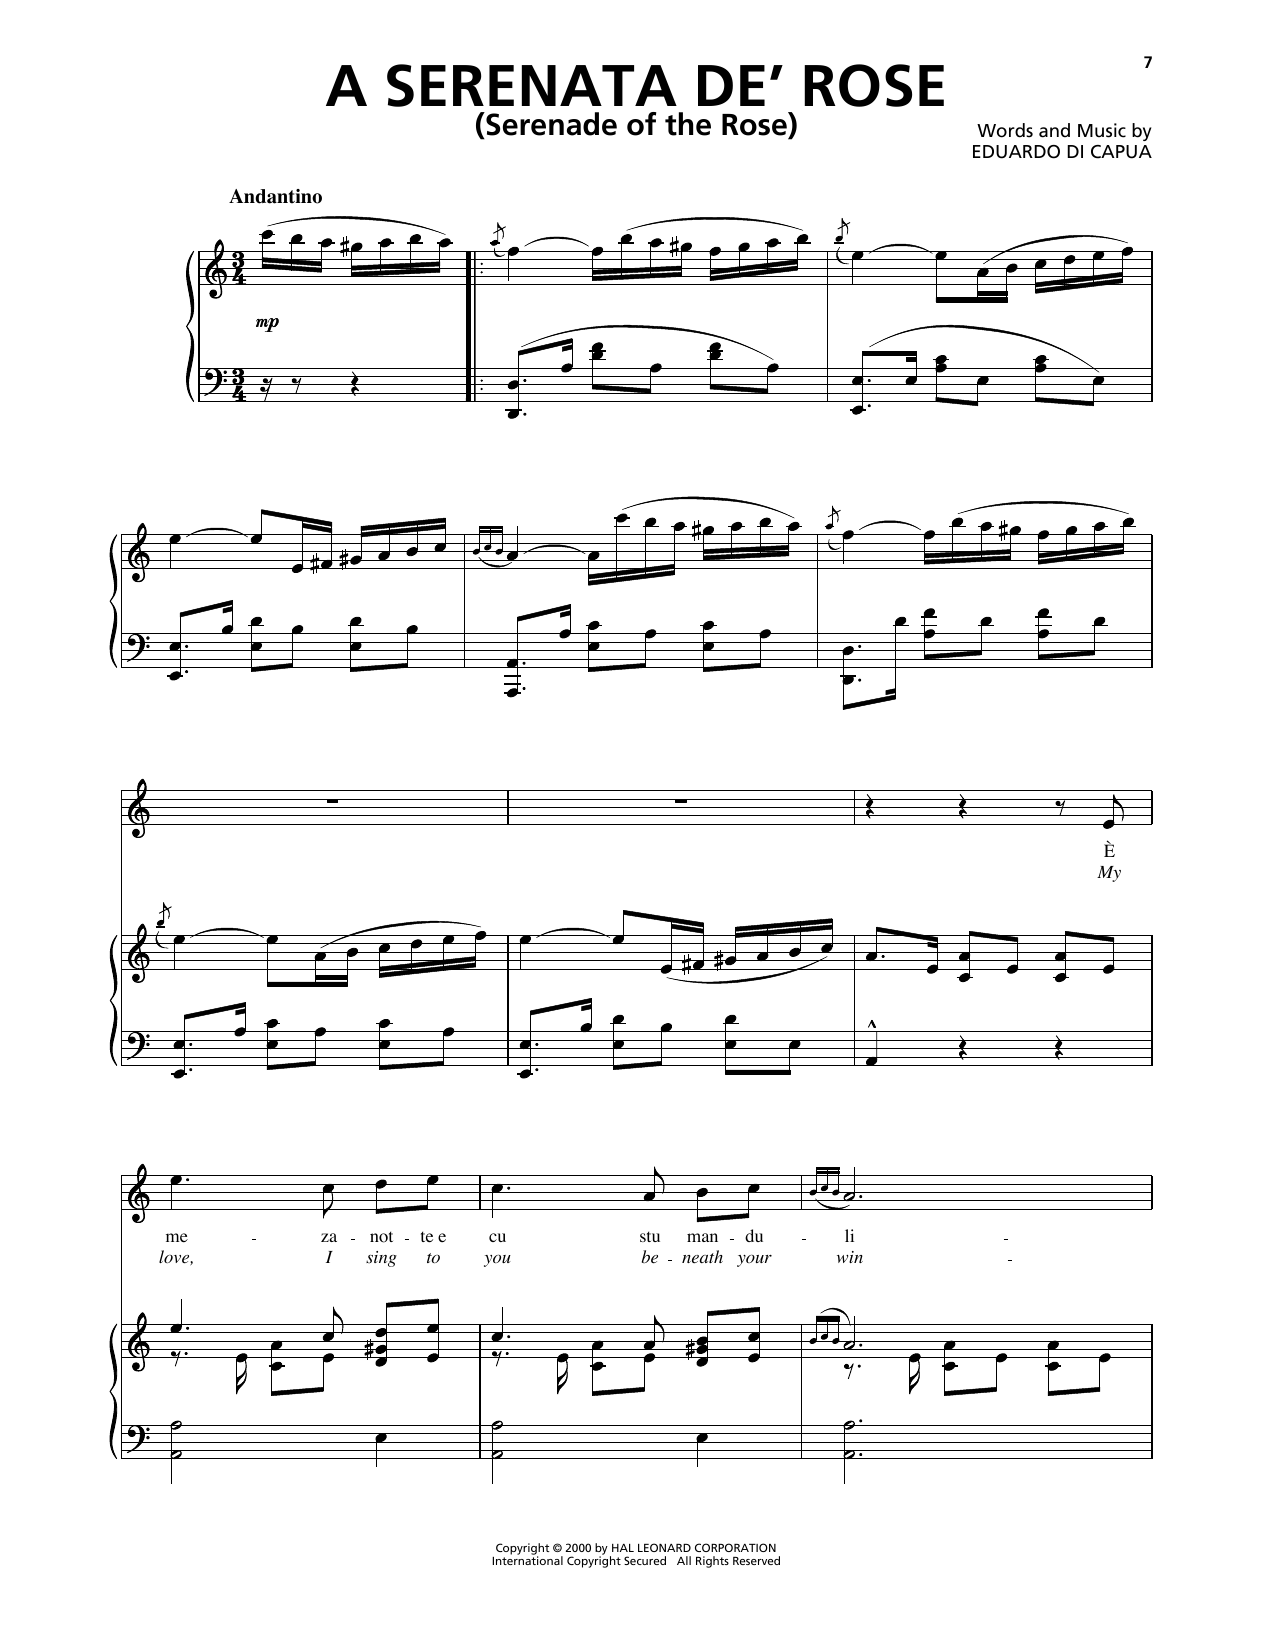 Eduardo di Capua A Serenata De' Rose (Serenade Of The Rose) Sheet Music Notes & Chords for Piano, Vocal & Guitar Chords (Right-Hand Melody) - Download or Print PDF